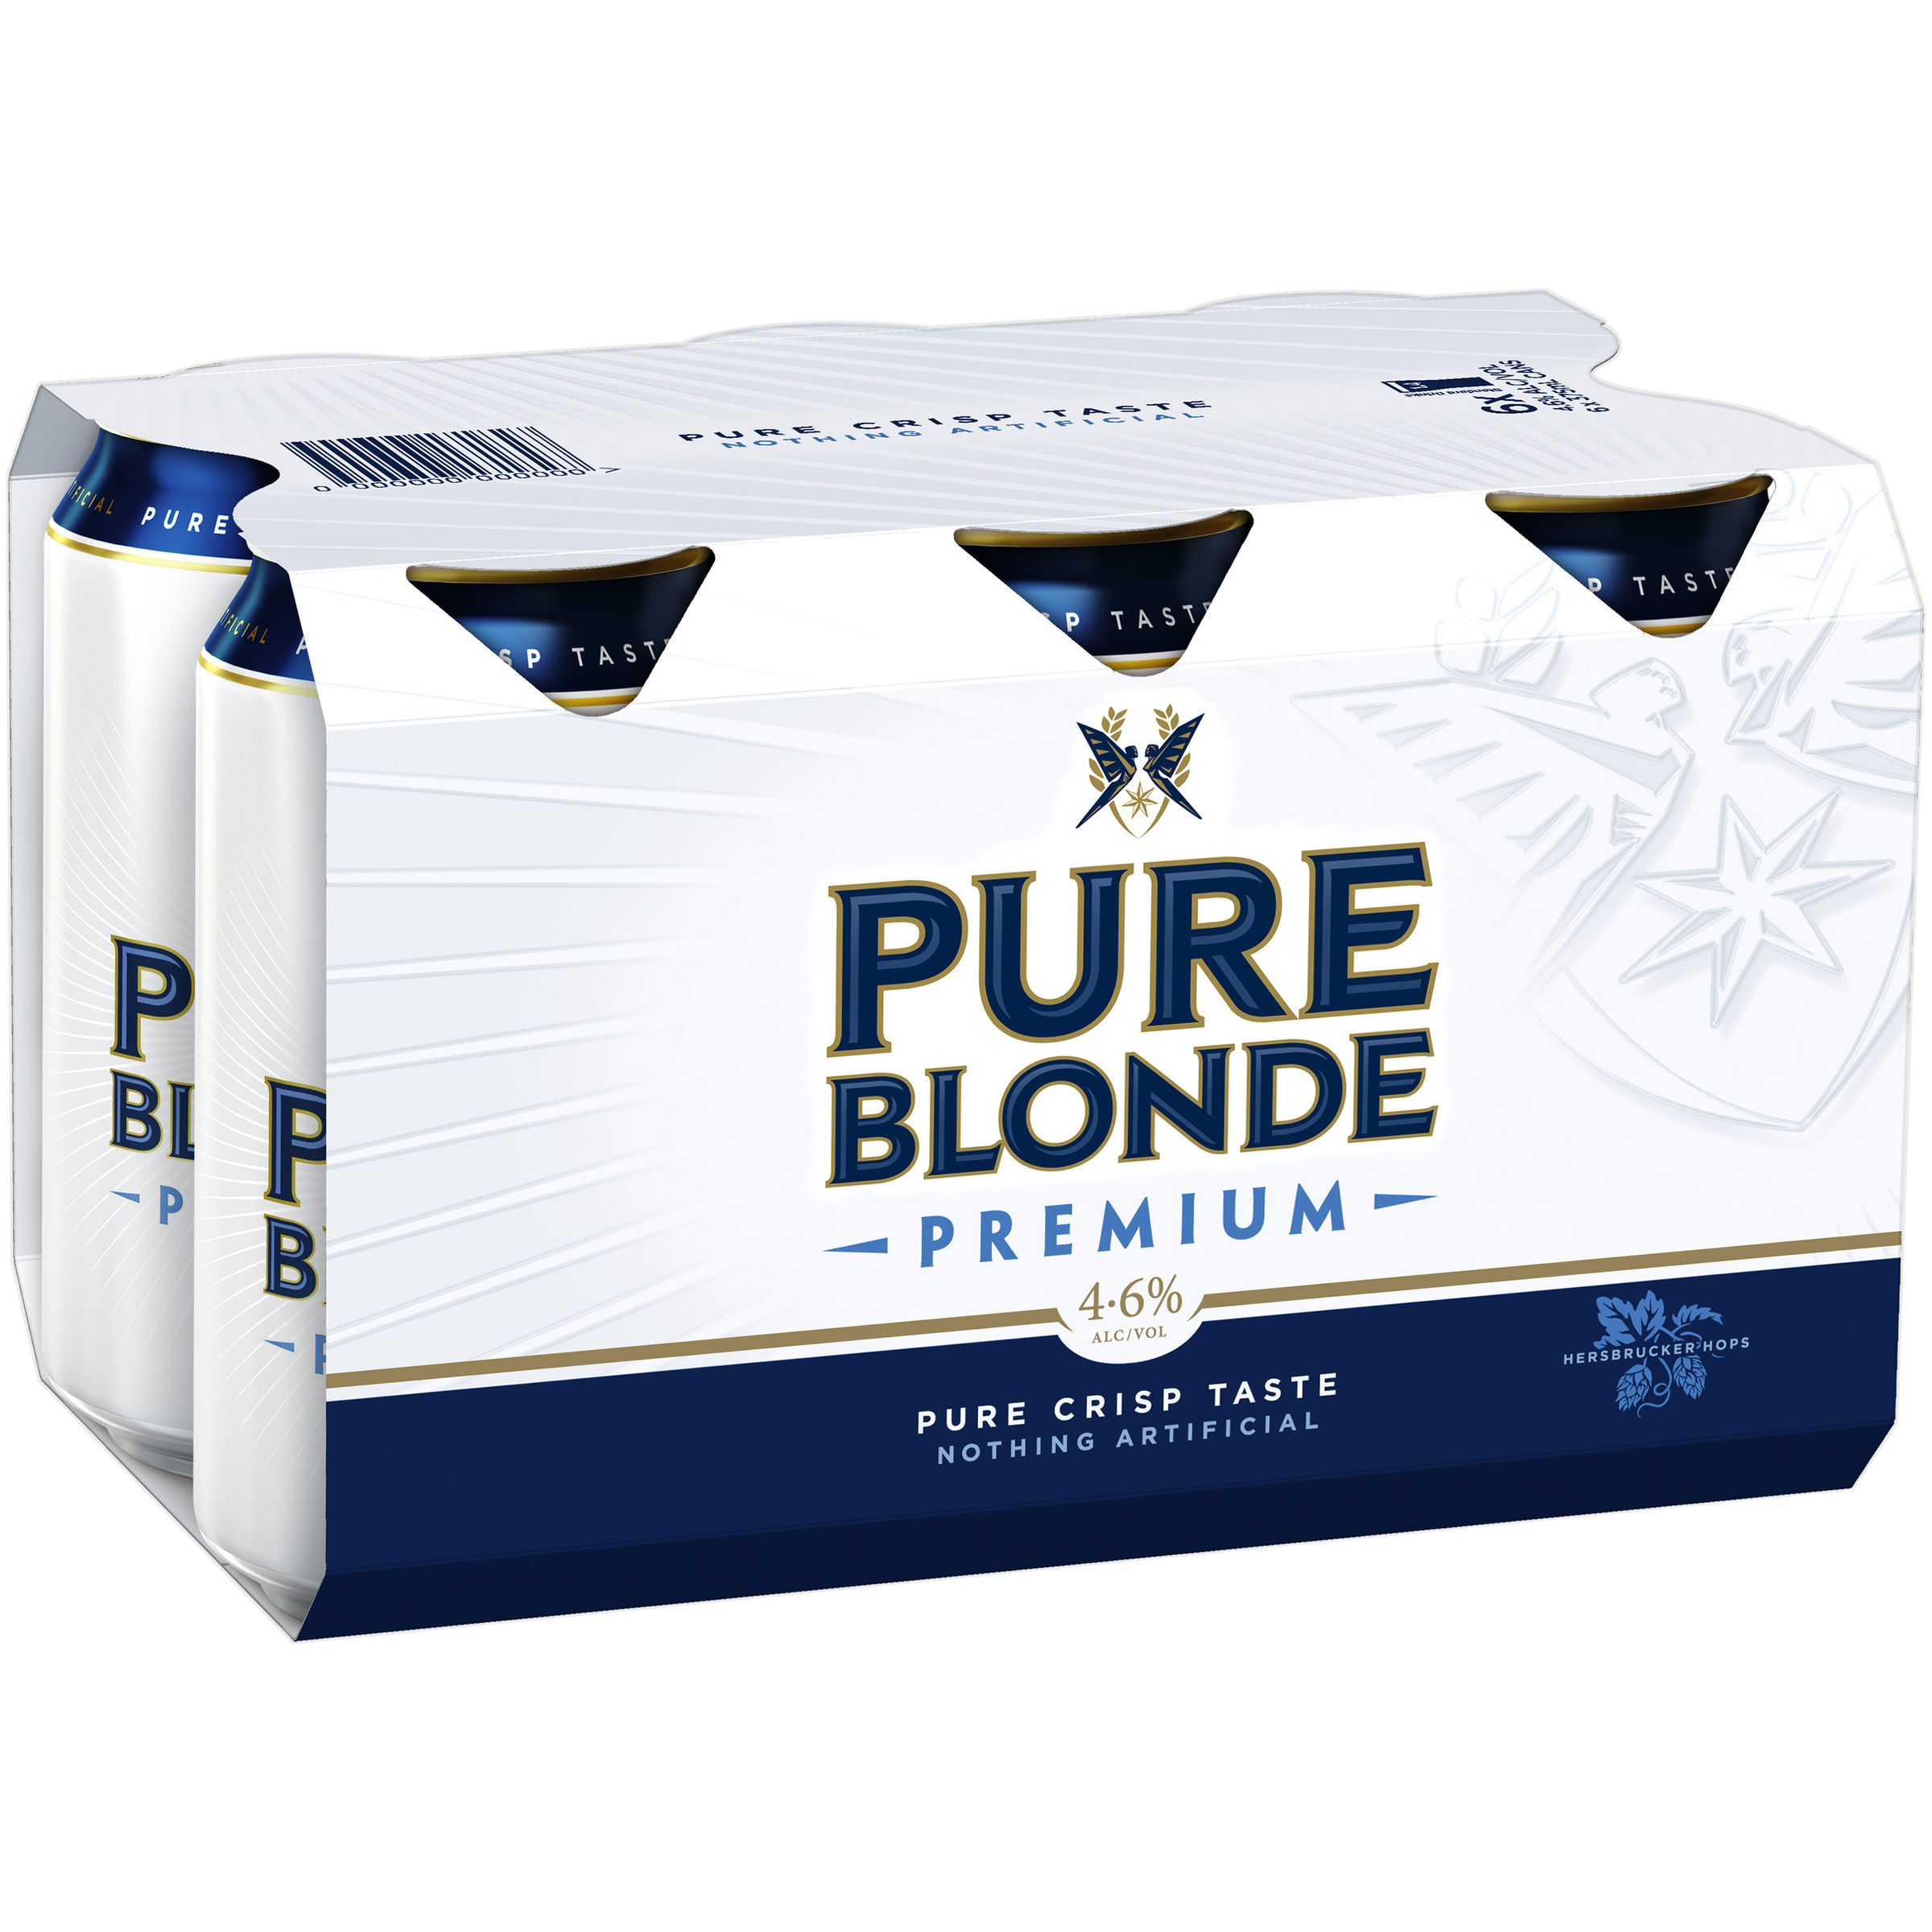 Blondes pure. Pure blonde Beer. Pure blonde. Postavaru Pure blonde пиво отзывы.